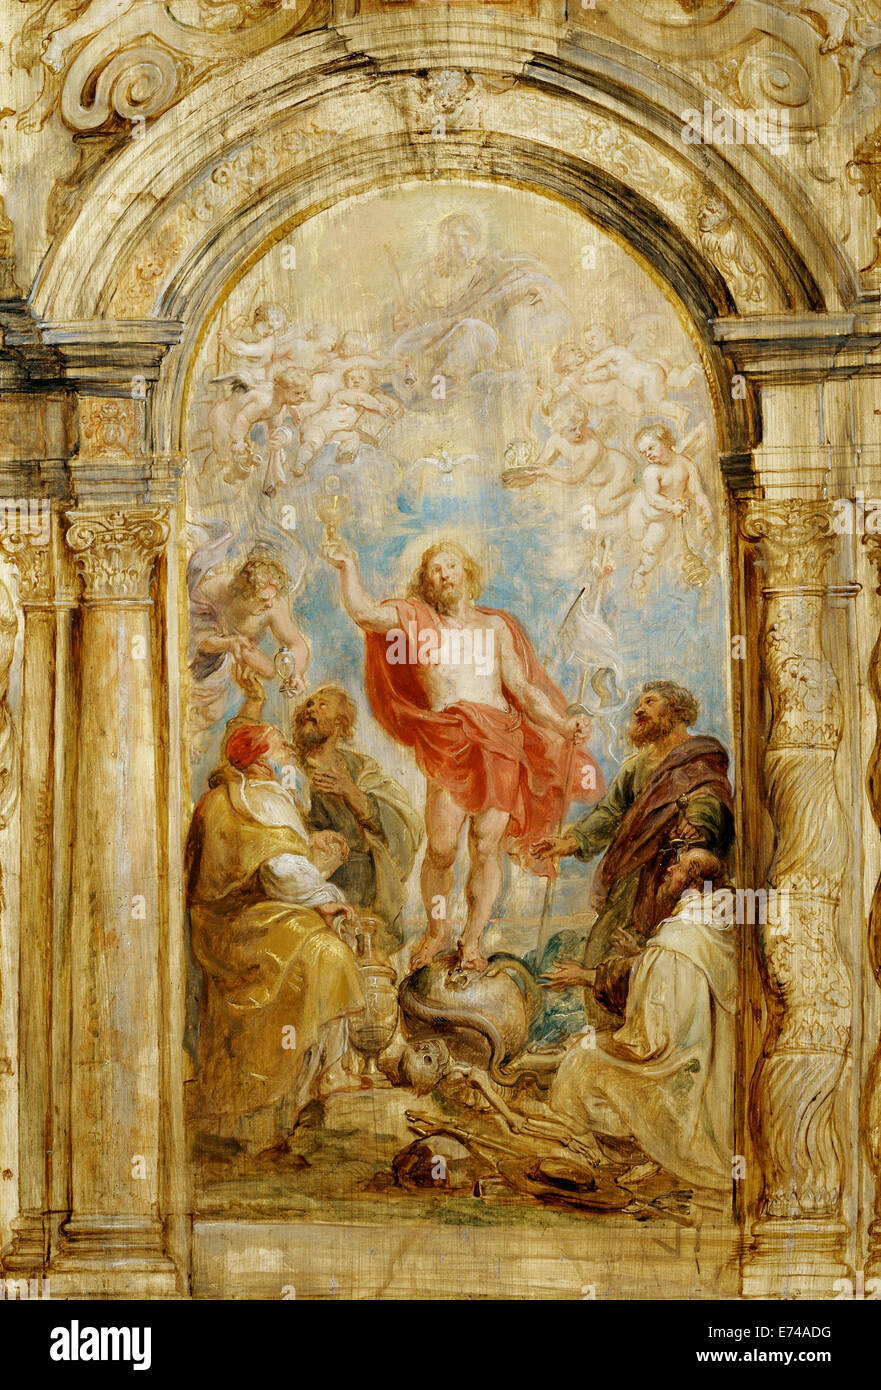 The Glorification of the Eucharist - by Peter Paul Rubens, 1632 Stock Photo